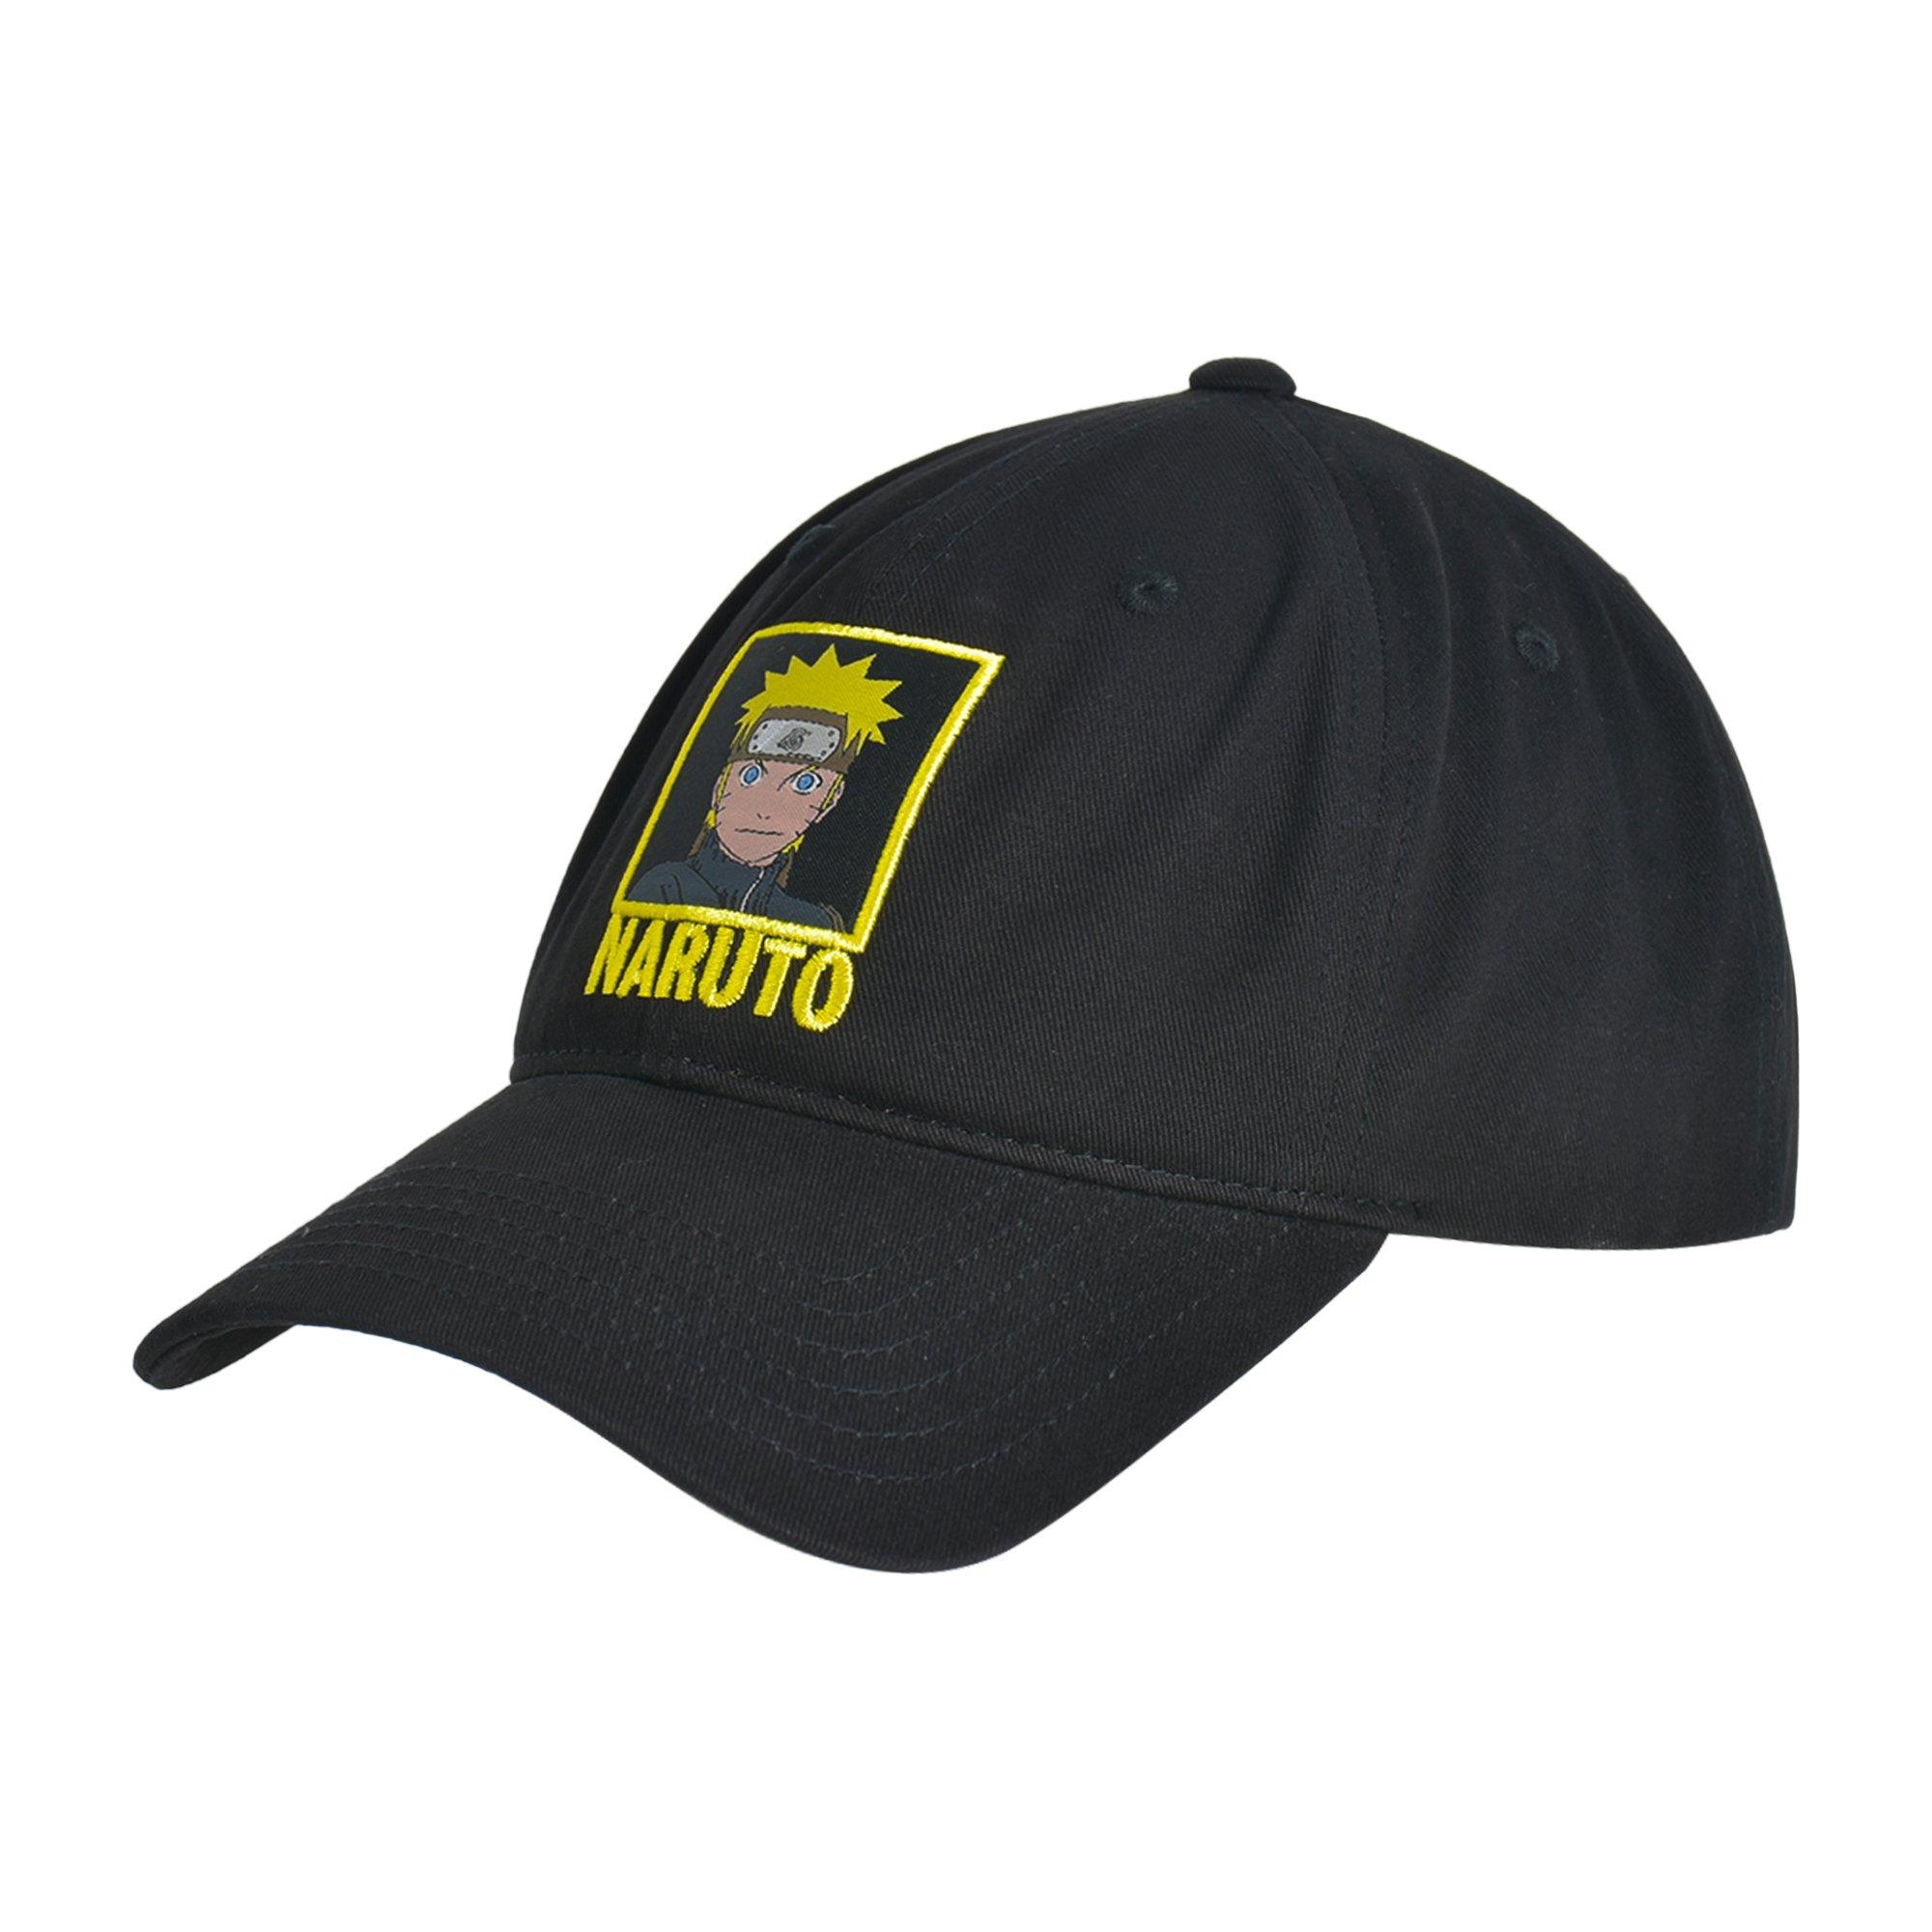 Naruto Embroidered Unisex Baseball Hat